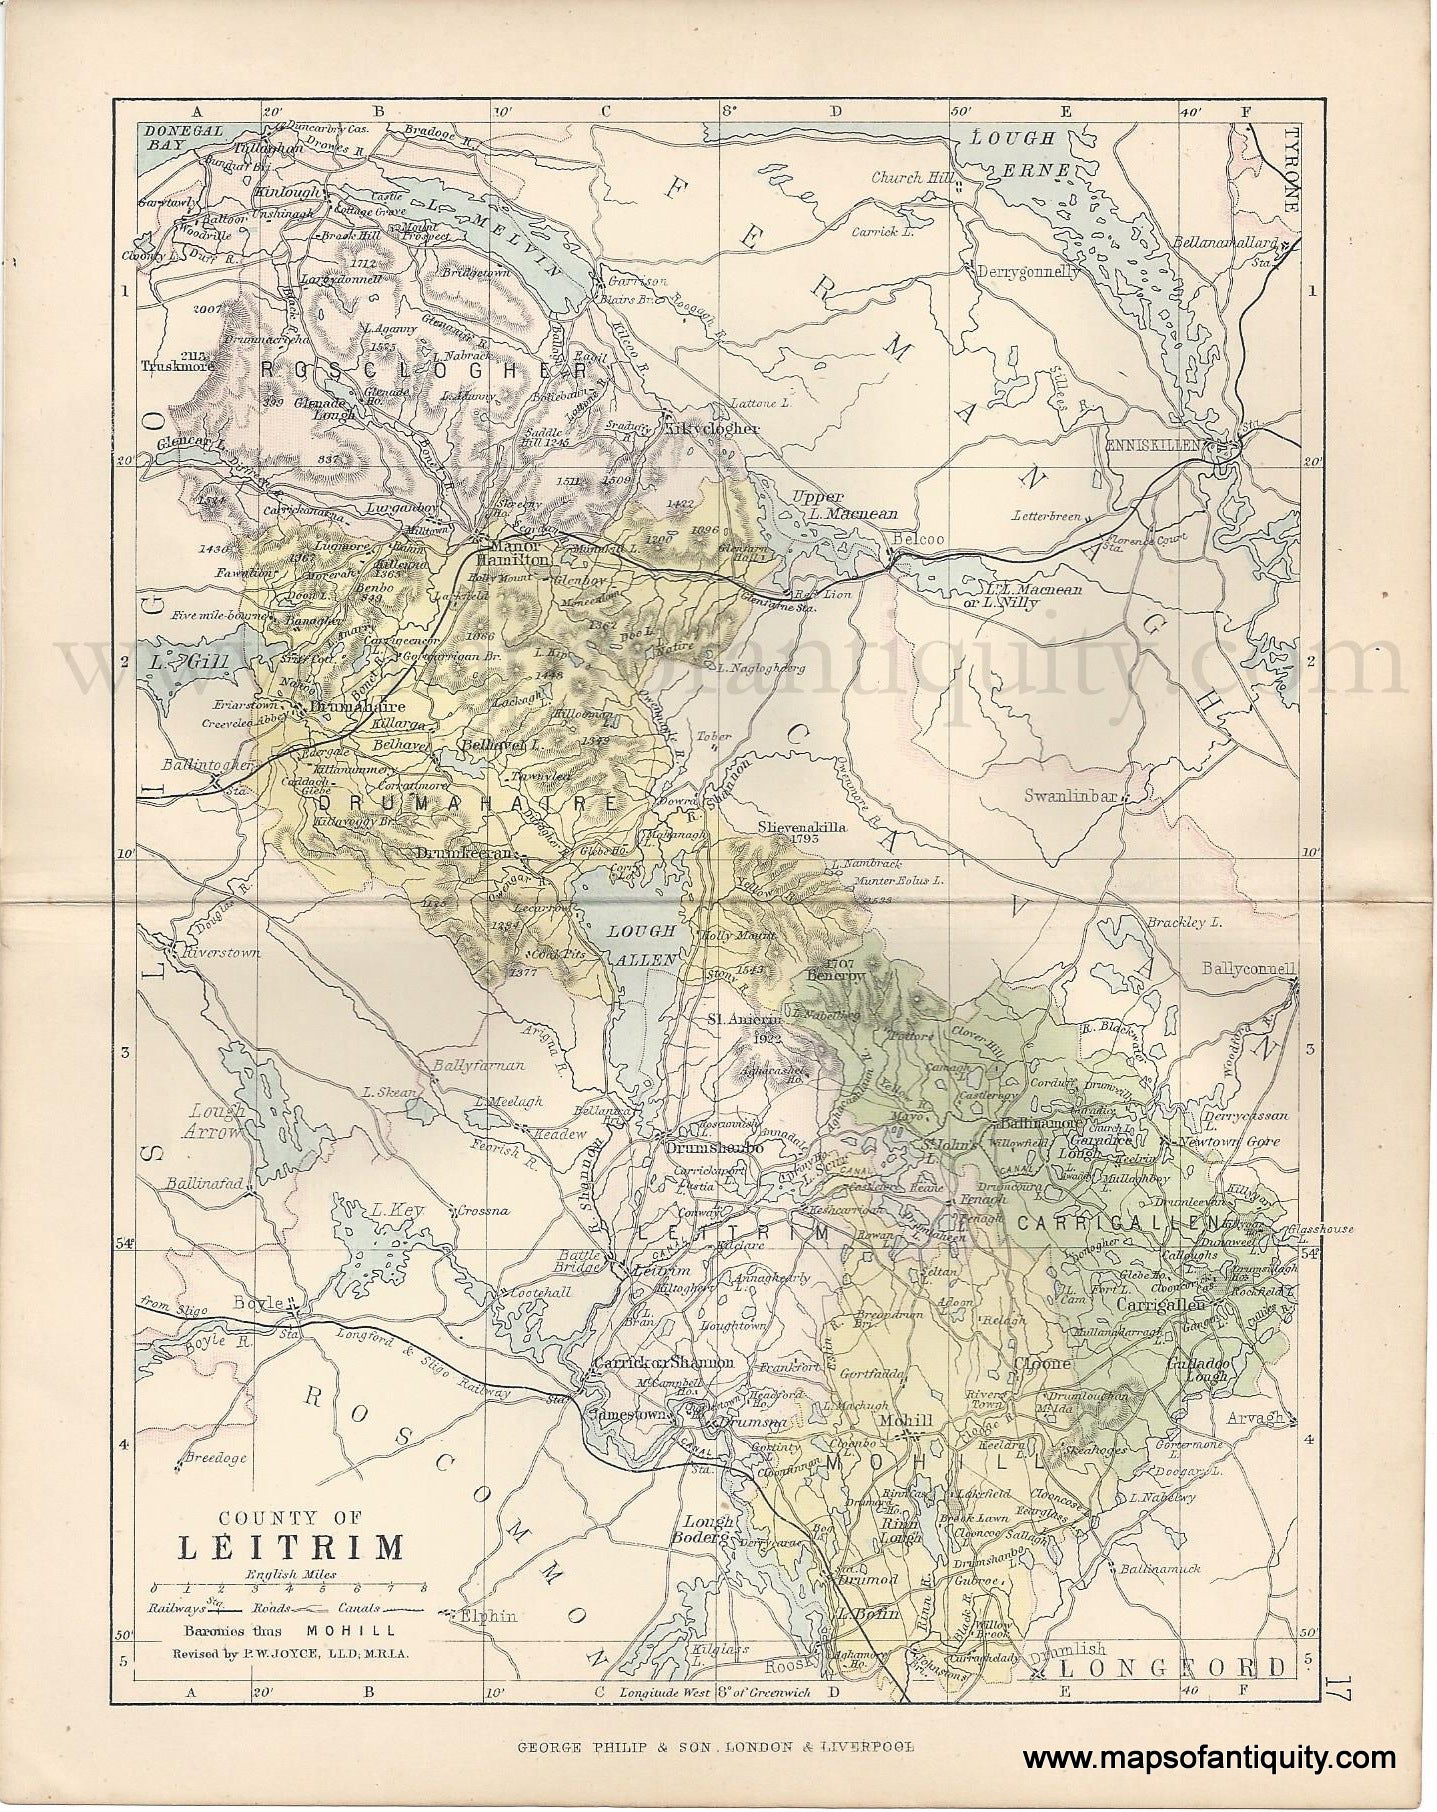 Genuine-Antique-Map-Ireland-County-of-Leitrim-1884-George-Philip-&-Son-Maps-Of-Antiquity